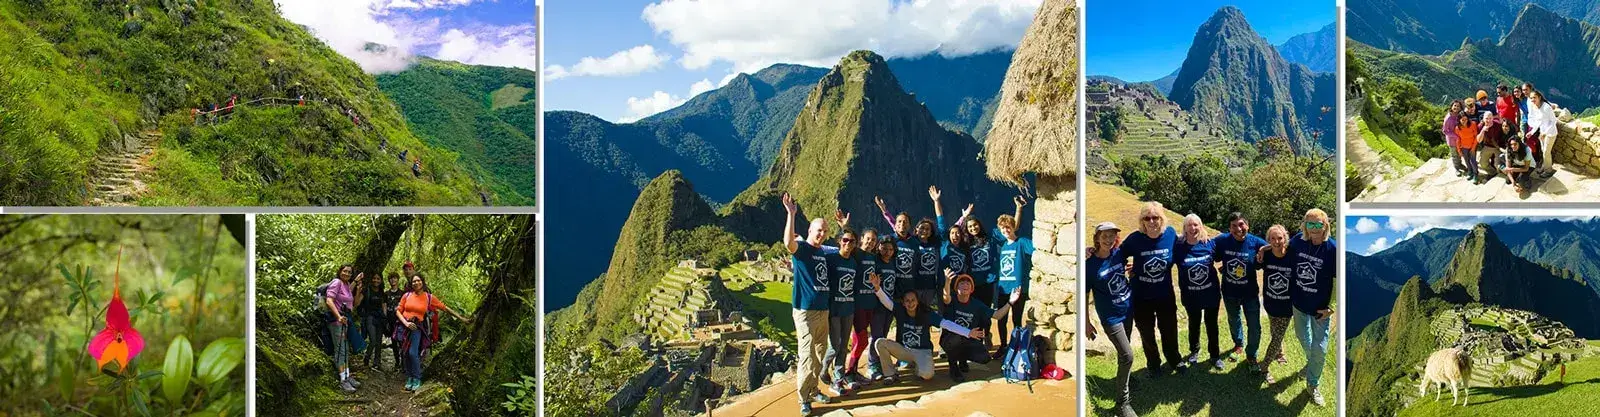 Lares Trek + Chemin Inca court 4 jours et 3 nuits - Trekkers locaux Pérou - Local Trekkers Peru